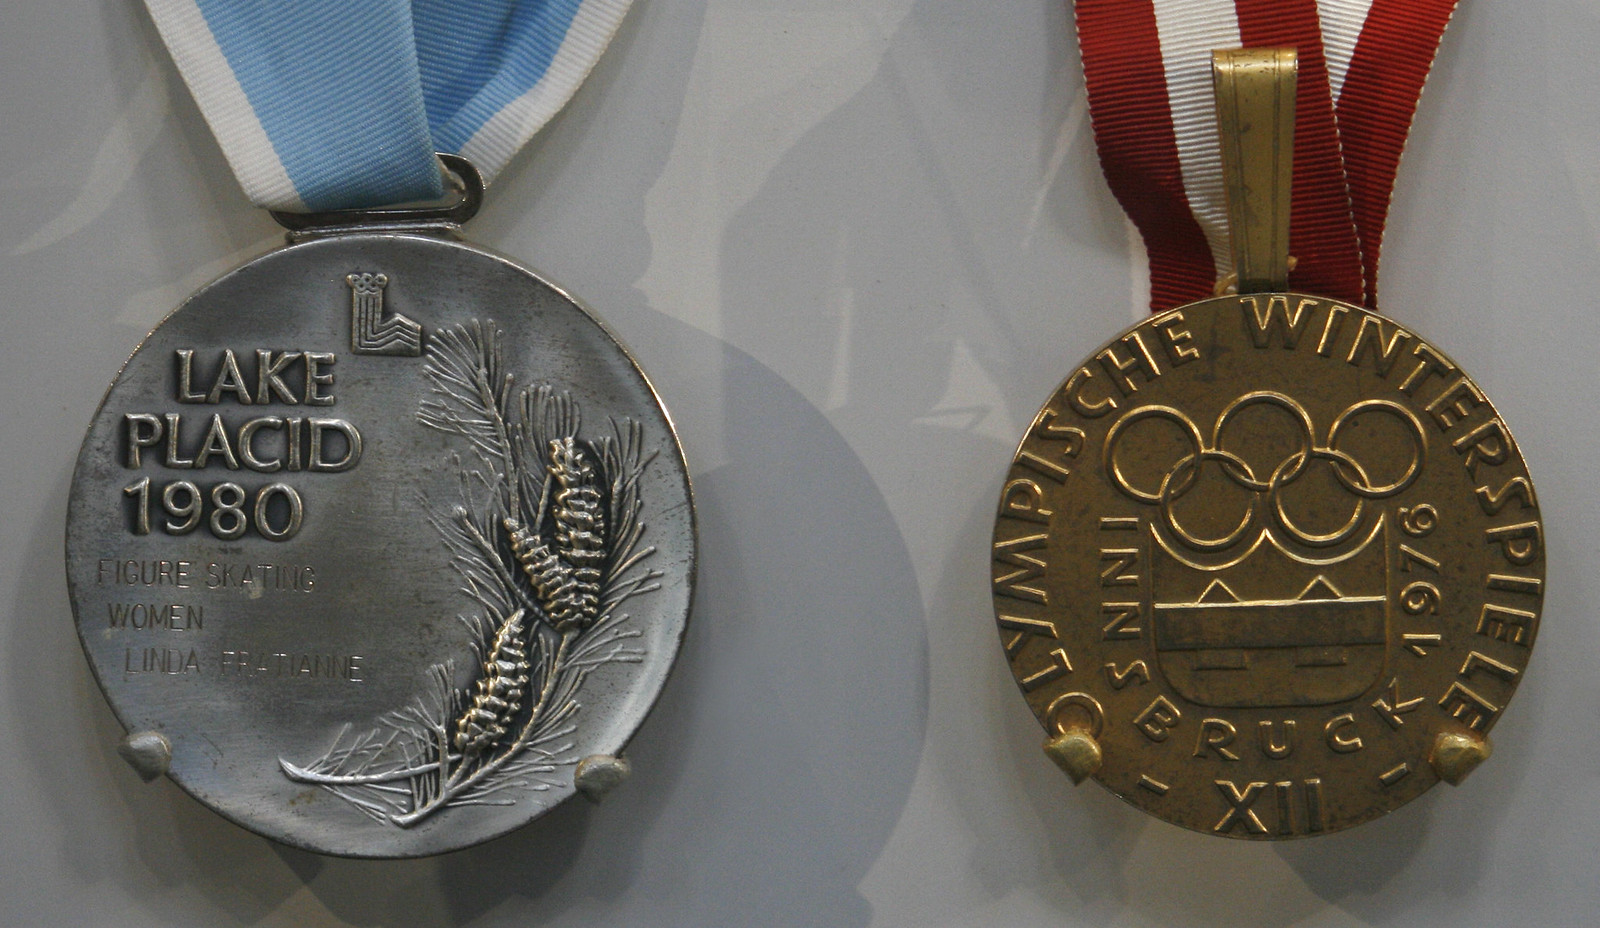 _MG_3030 - (L): Silver Medal awarded to Linda Fratianne for … - Flickr